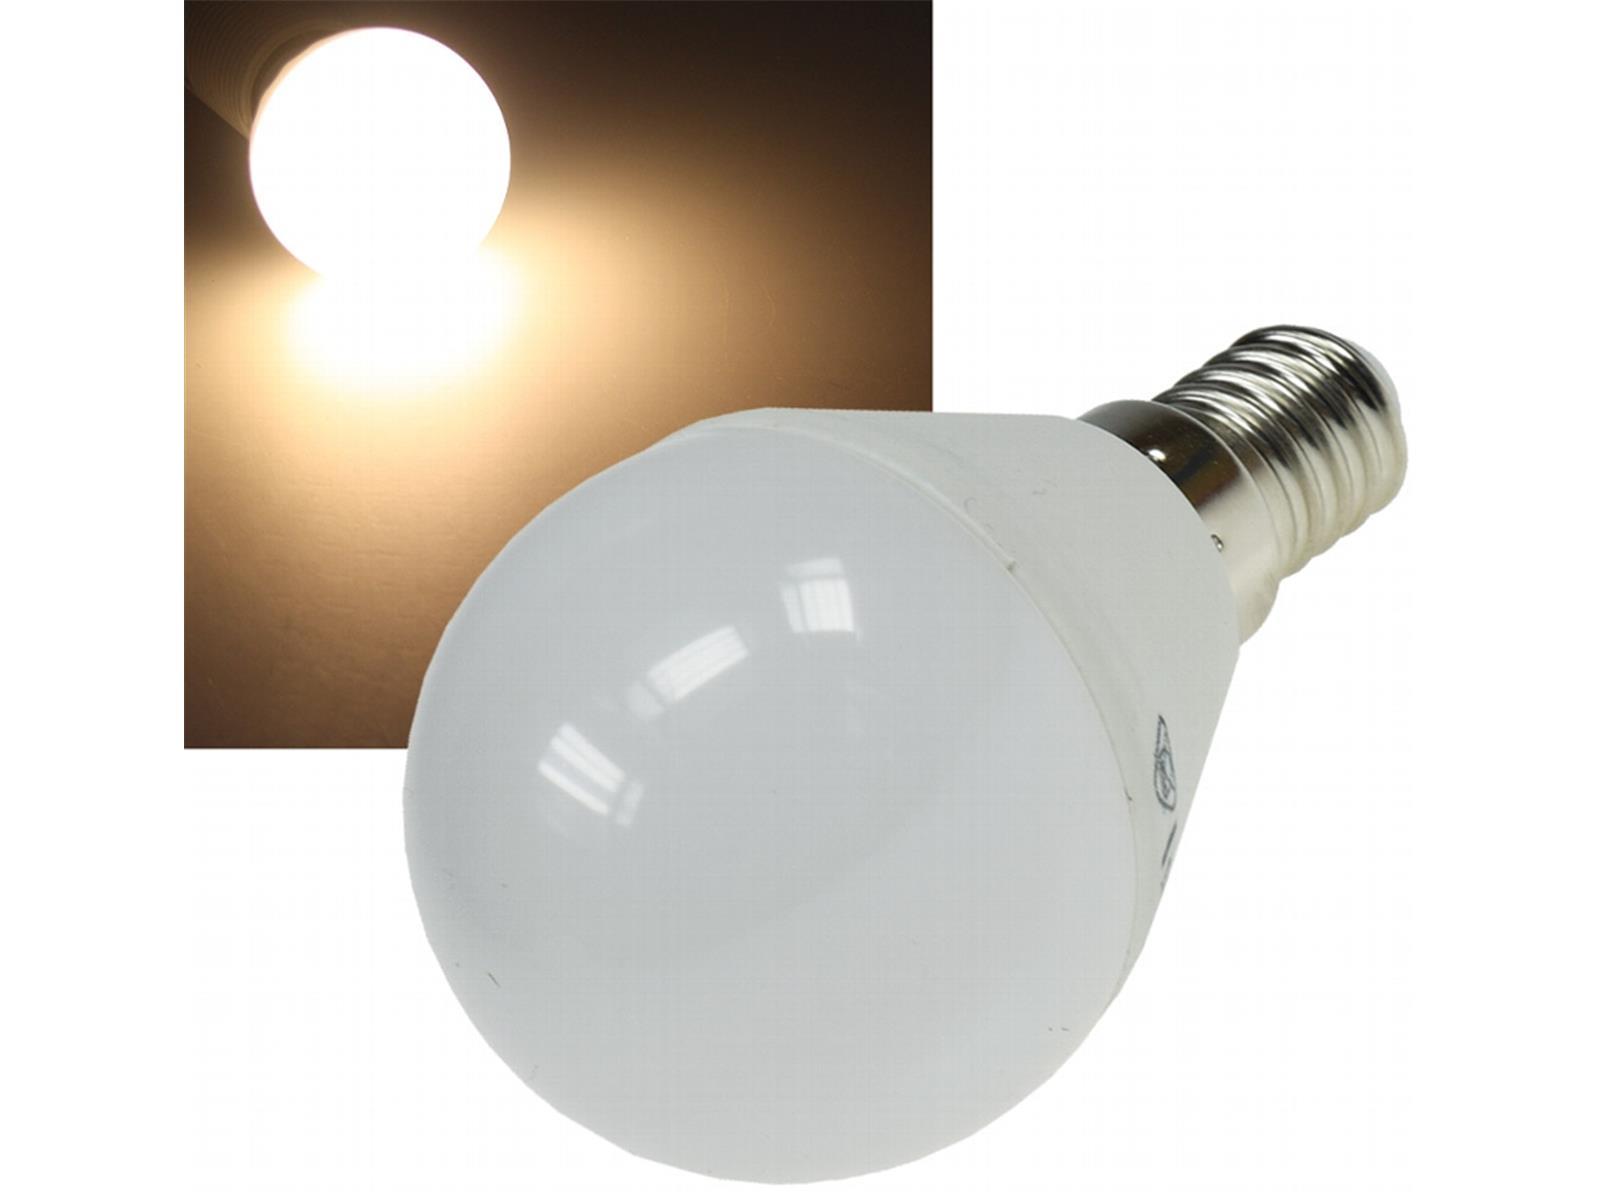 LED Tropfenlampe E14 "T25 SMD" warmweiß 16 SMD LEDs, 3000k, 220lm, 230V/3W, 45mm